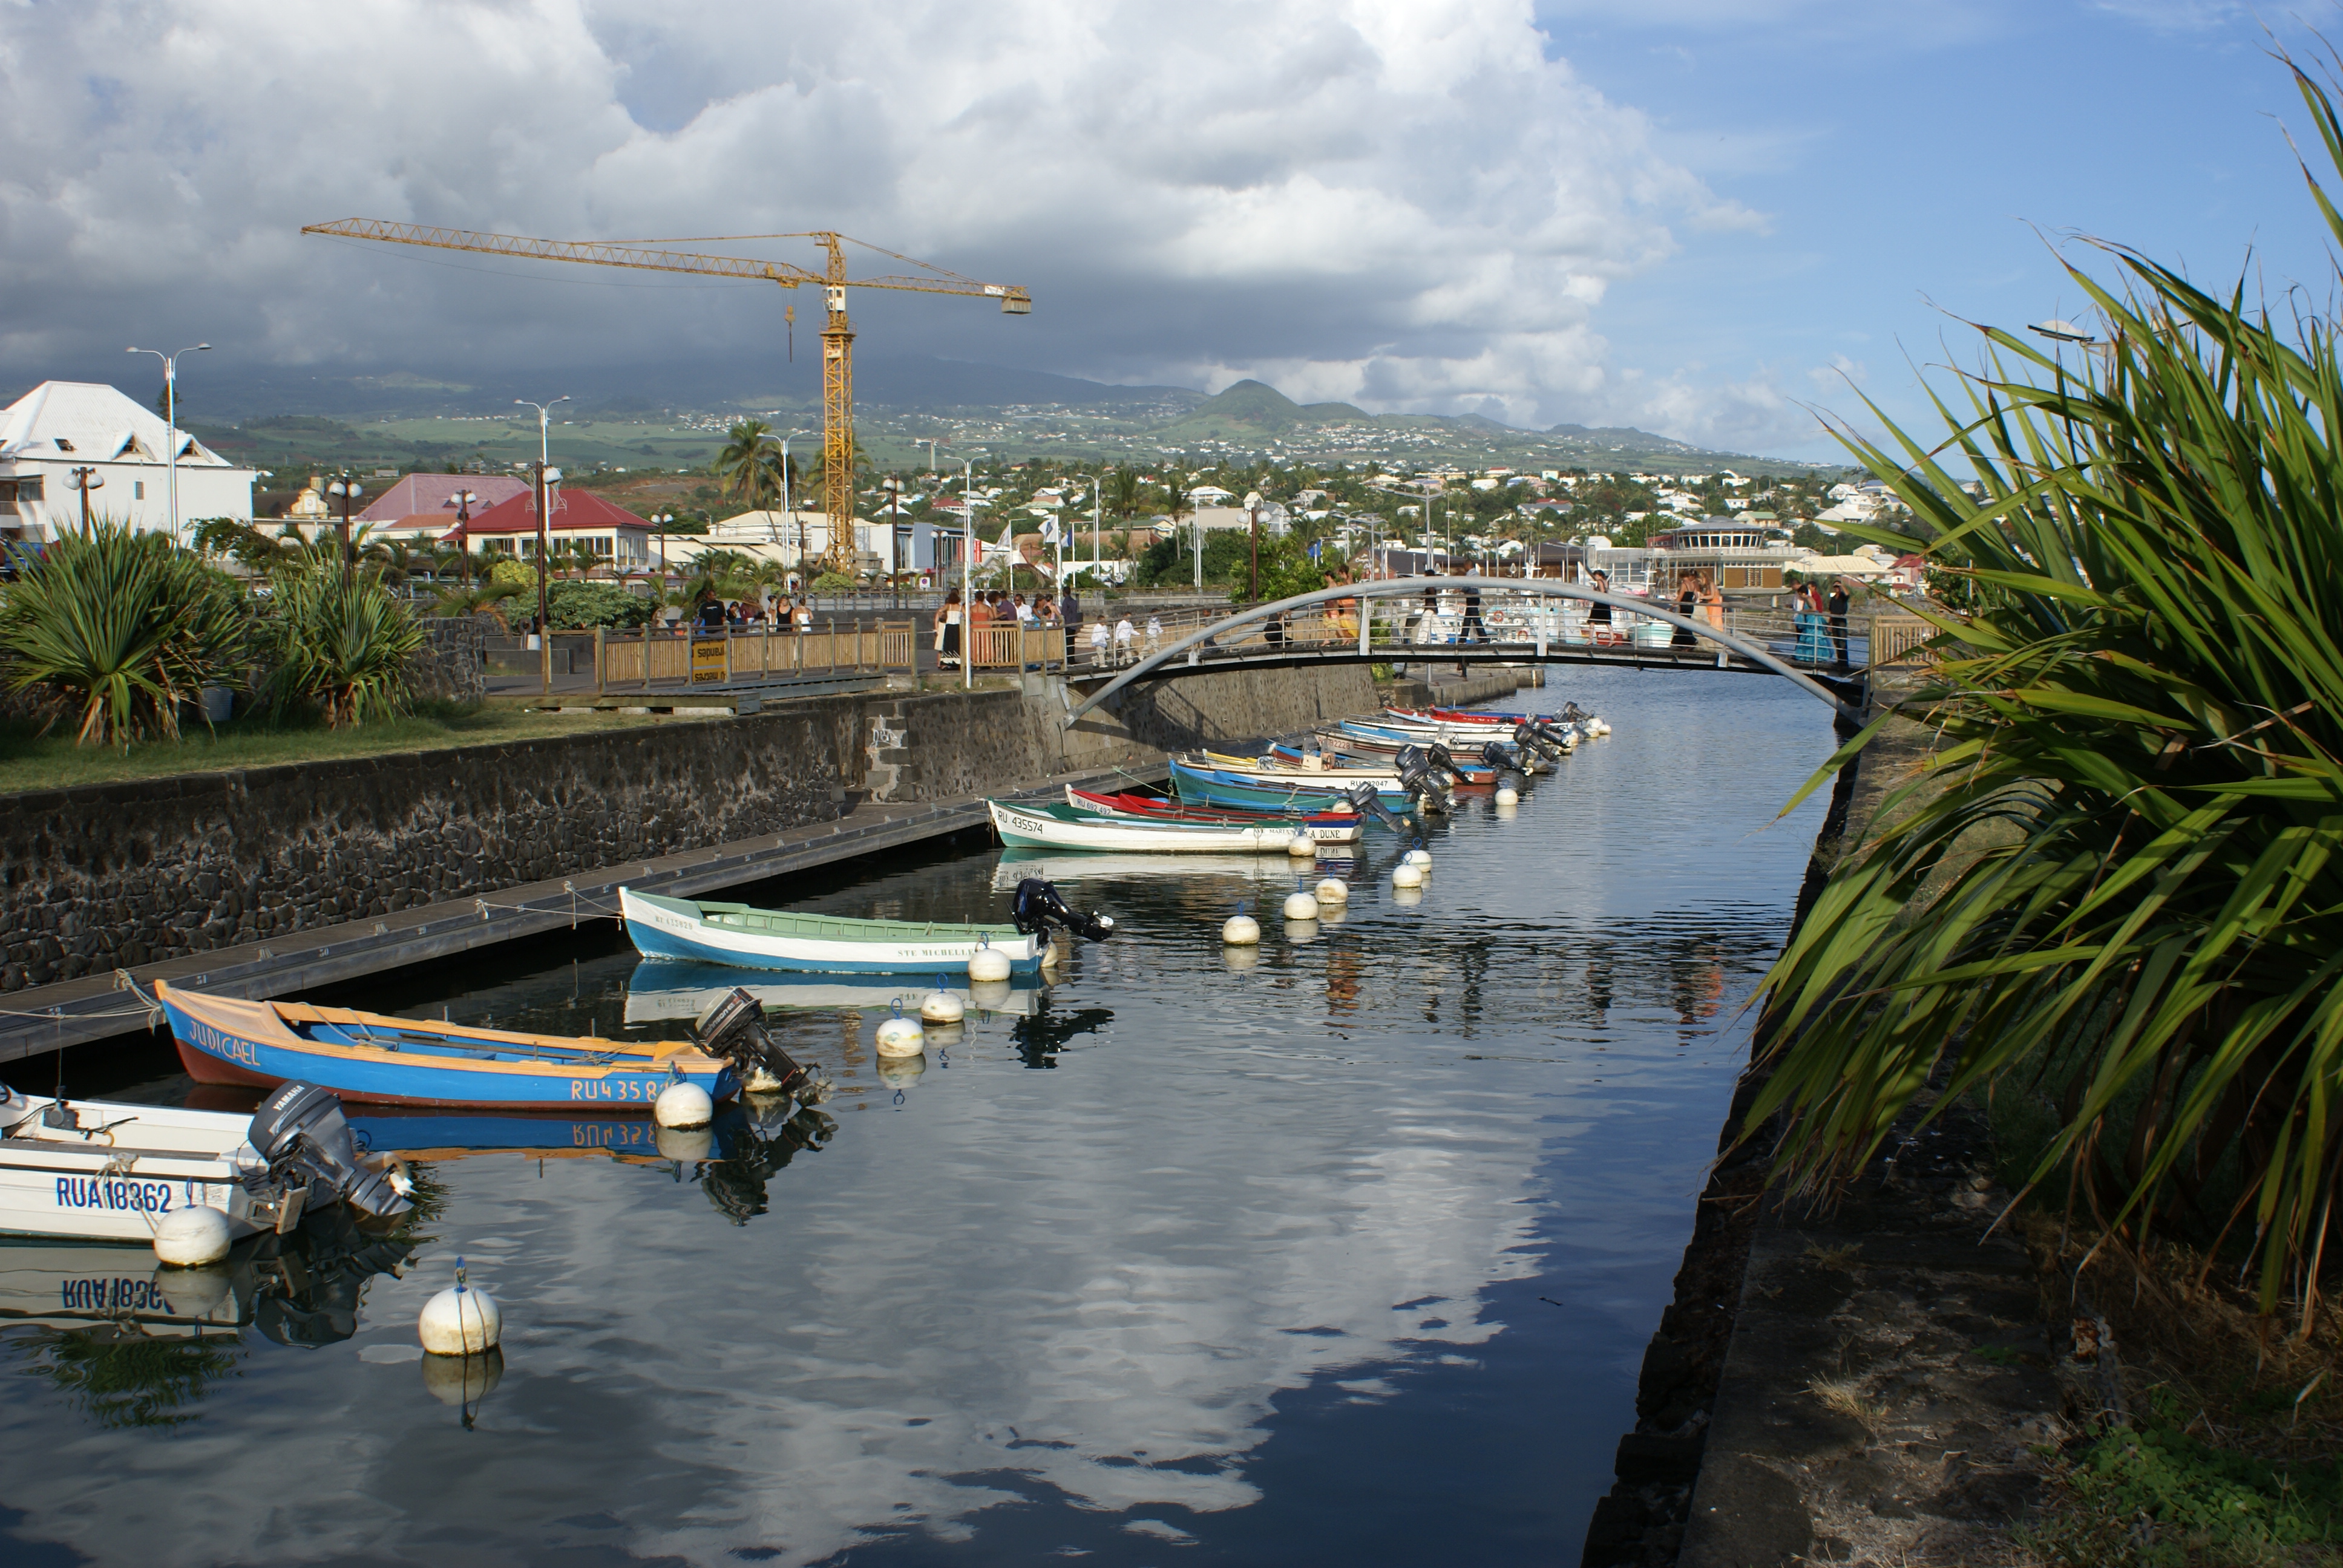 File:Saint-Pierre-de-la-Réunion Darse.JPG - Wikimedia Commons